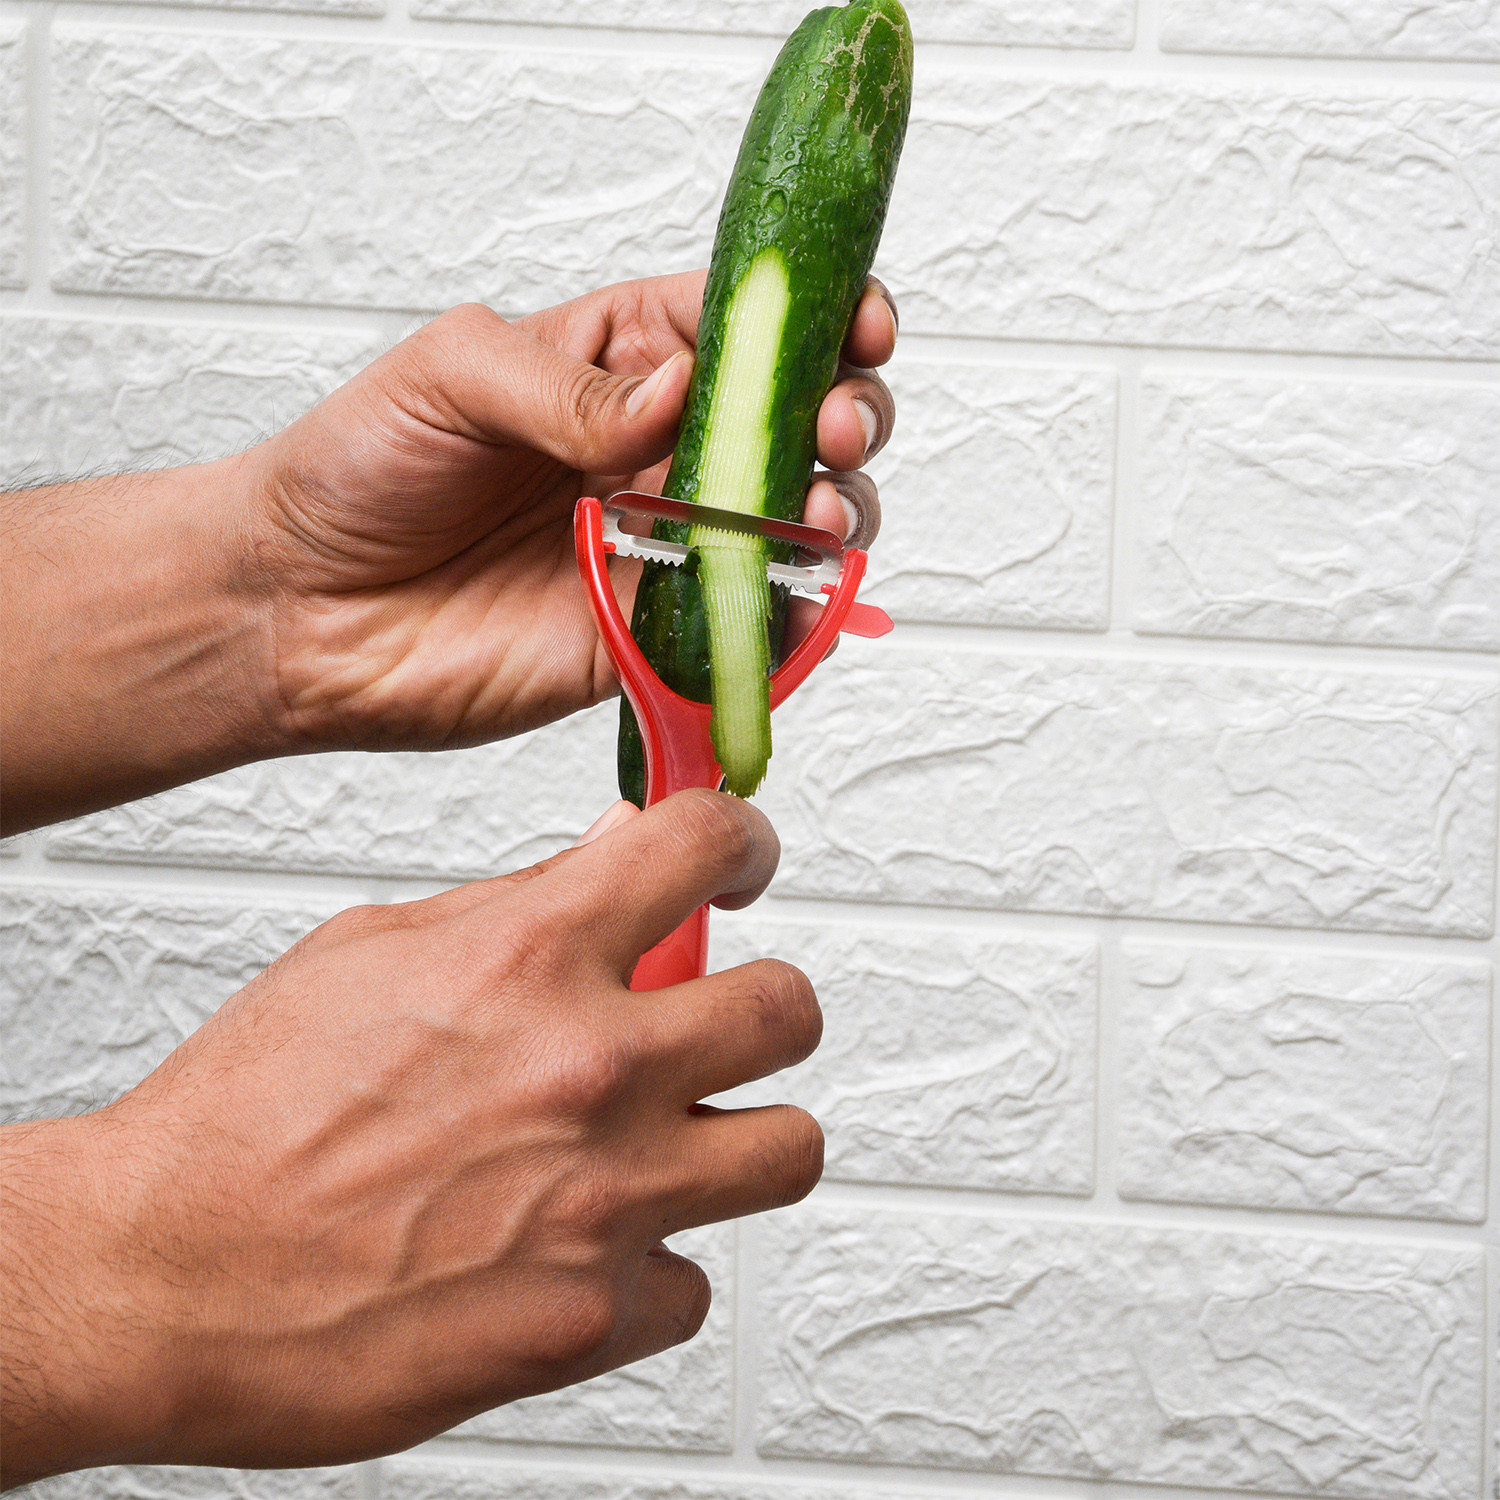 Kuber Industries Peeler|Plastic Vegetable Peeler|Fruit Peeler|Non-Slip Handle|Steel Sharp Straight Blade|Y Shaped Peeler|Kitchen Peeler|Pack of 3 (Red)